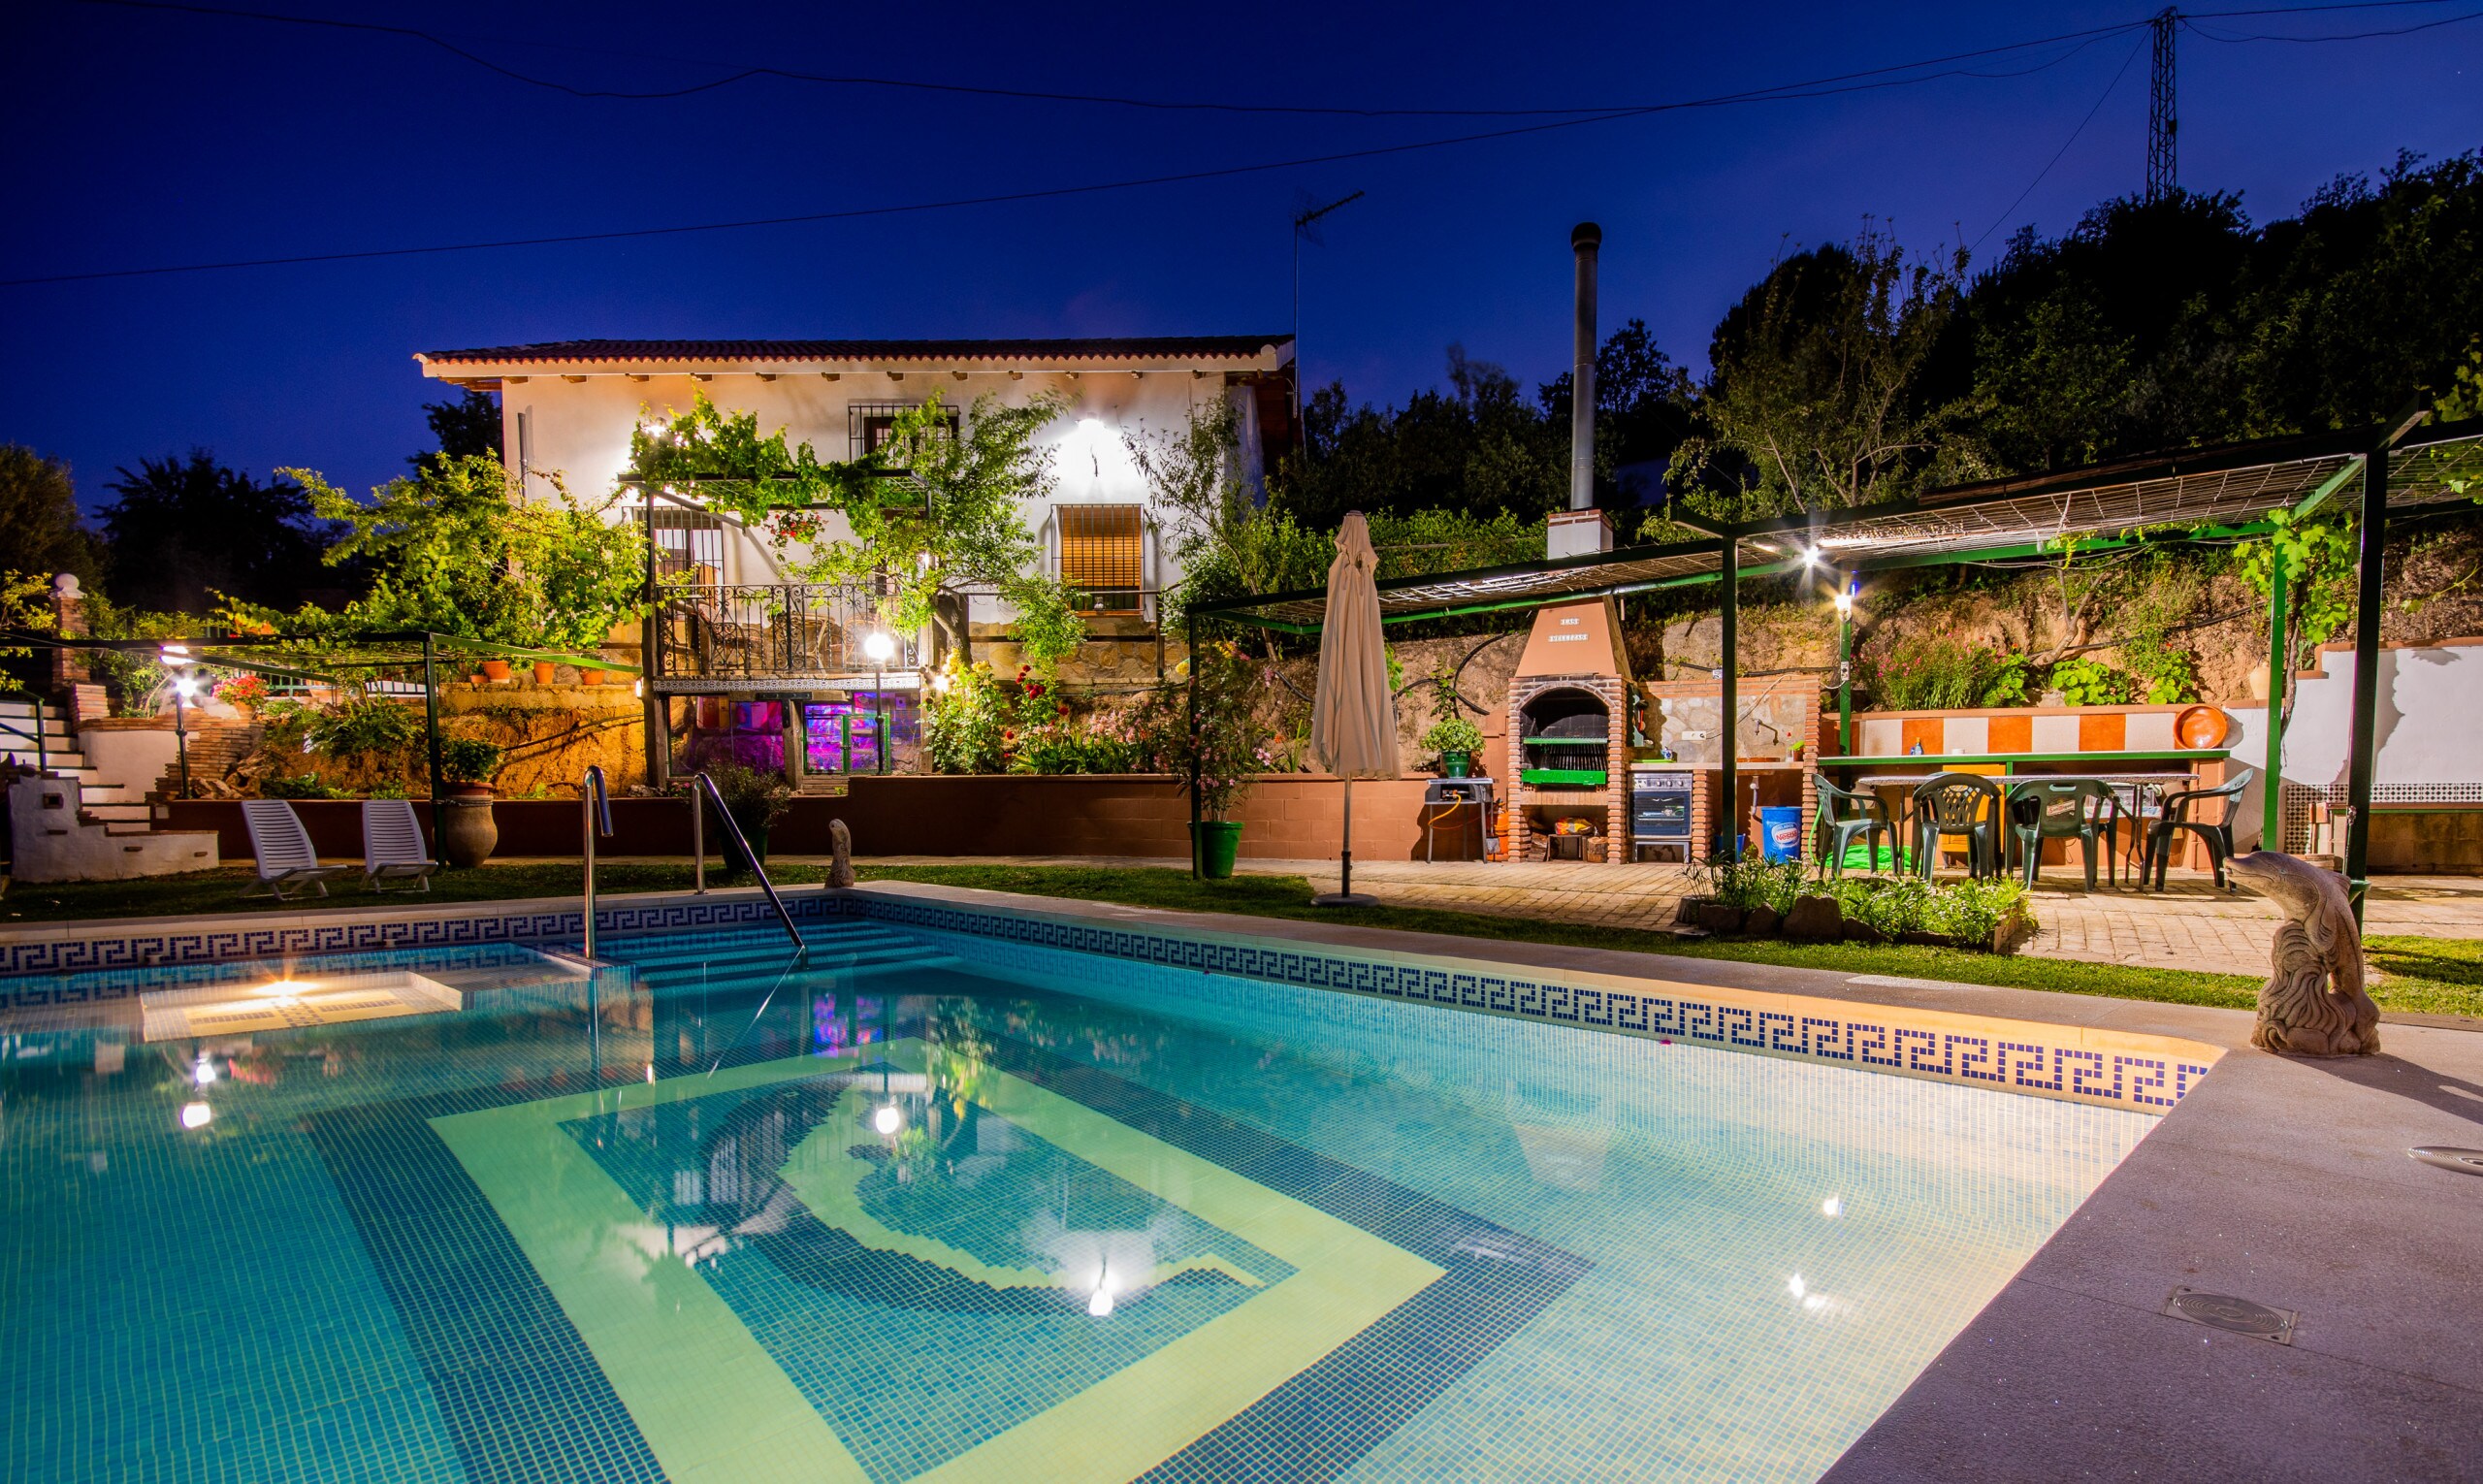 Enjoy the pool of this house near El Caminito del Rey